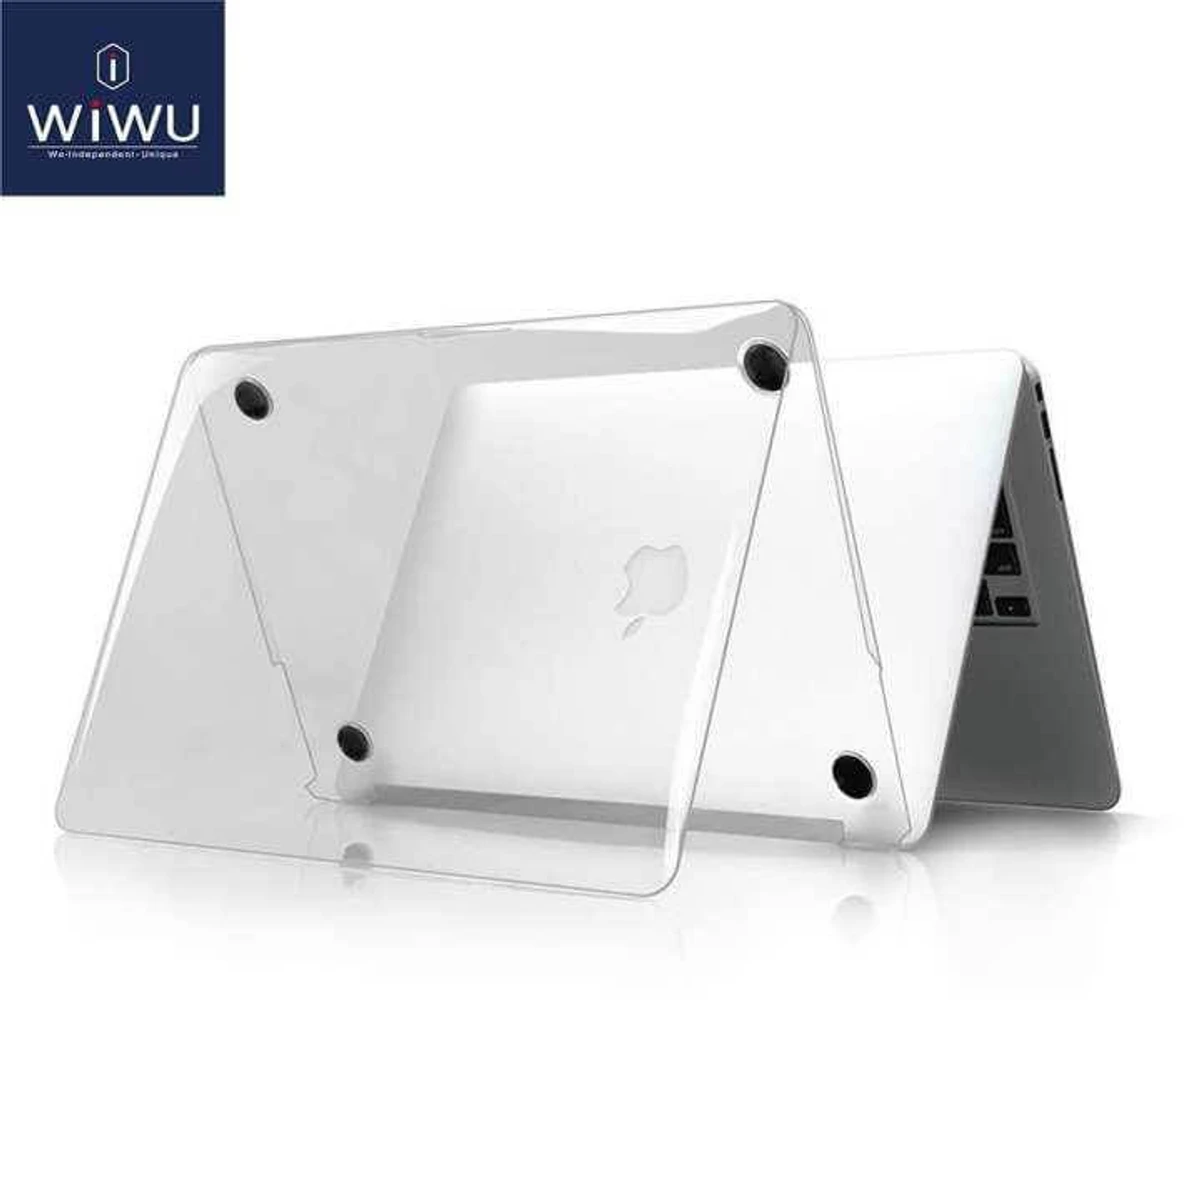 WiWu iShield Ultra Thin Hard Shell Anti-Slip Case for Macbook Air 13inch